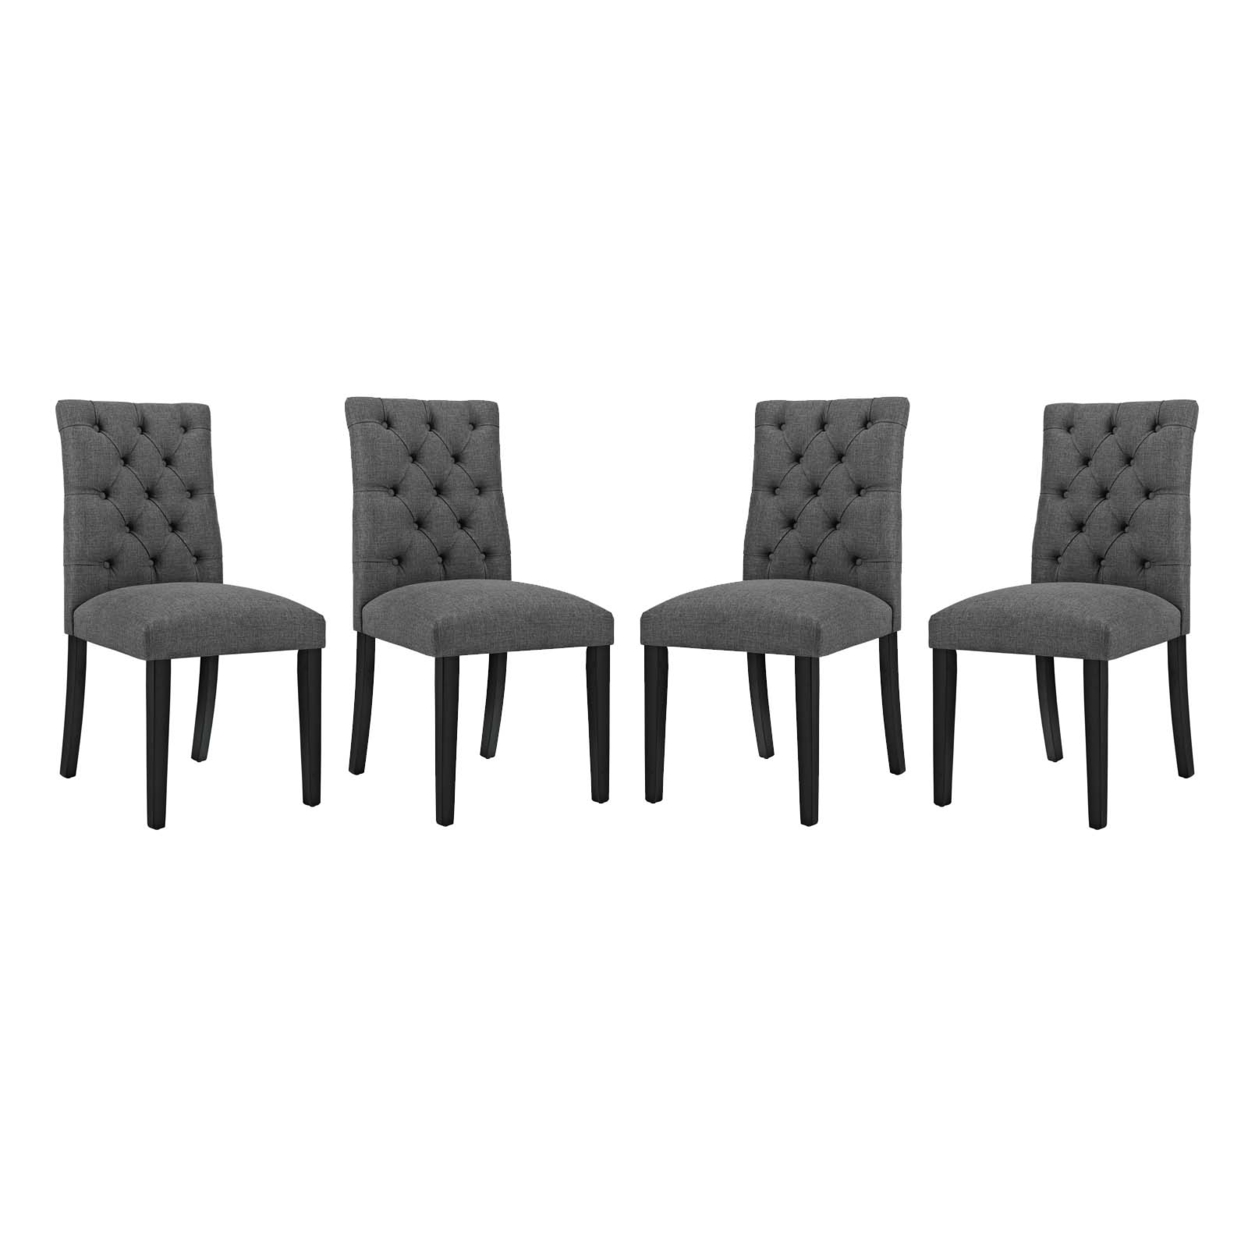 Duchess Dining Chair Fabric Set Of 4,Gray